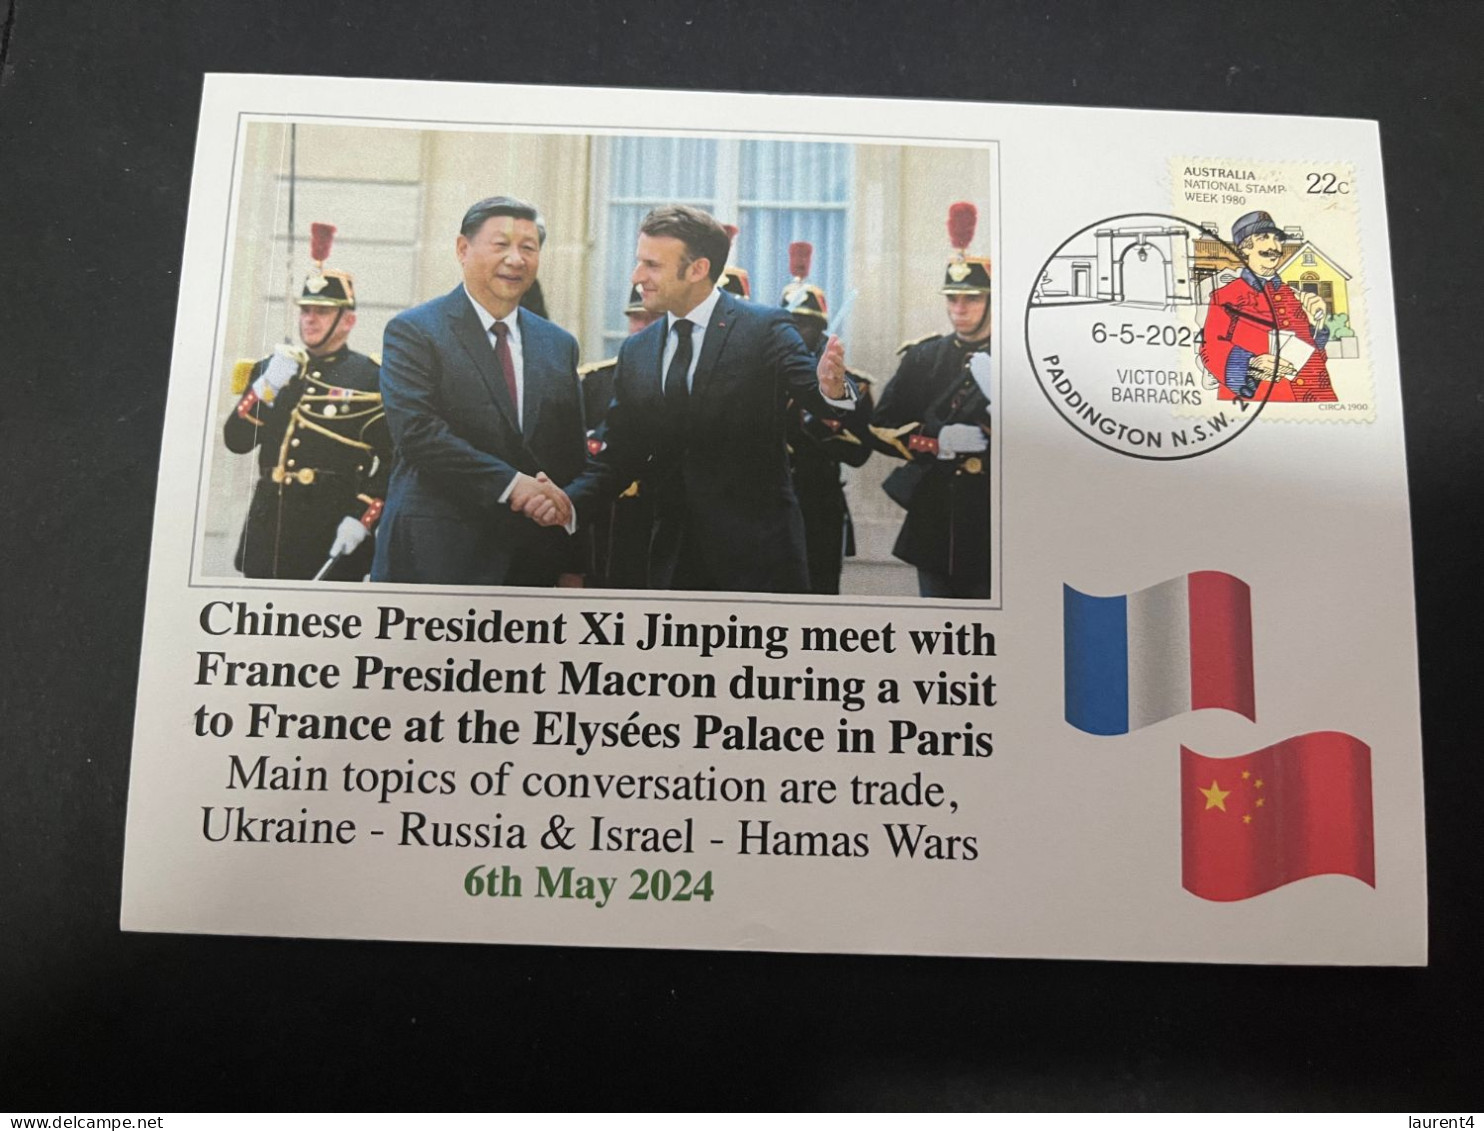 7-5-2024 (4 Z 22) China President Xi Visit To France & Meet President Macon - Russia Ukraine & Israel Gaza Wars + Trade - Militaria